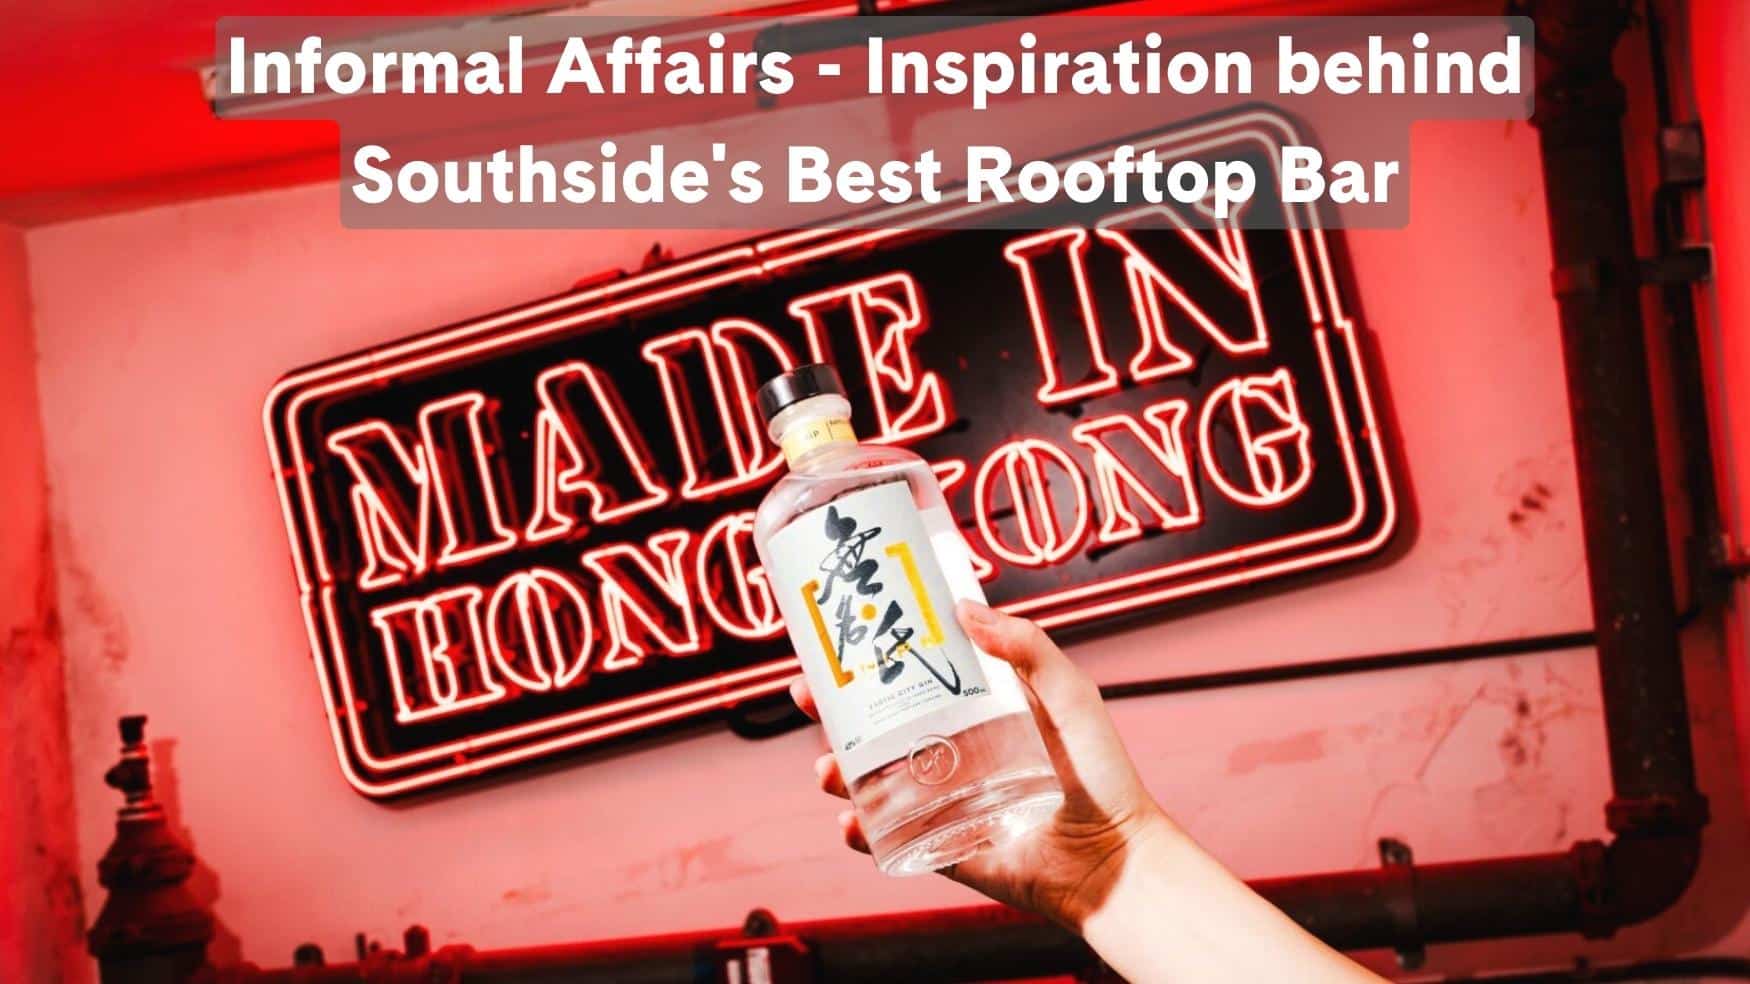 Informal Affairs - Inspiration behind Southside's Best Rooftop Bar